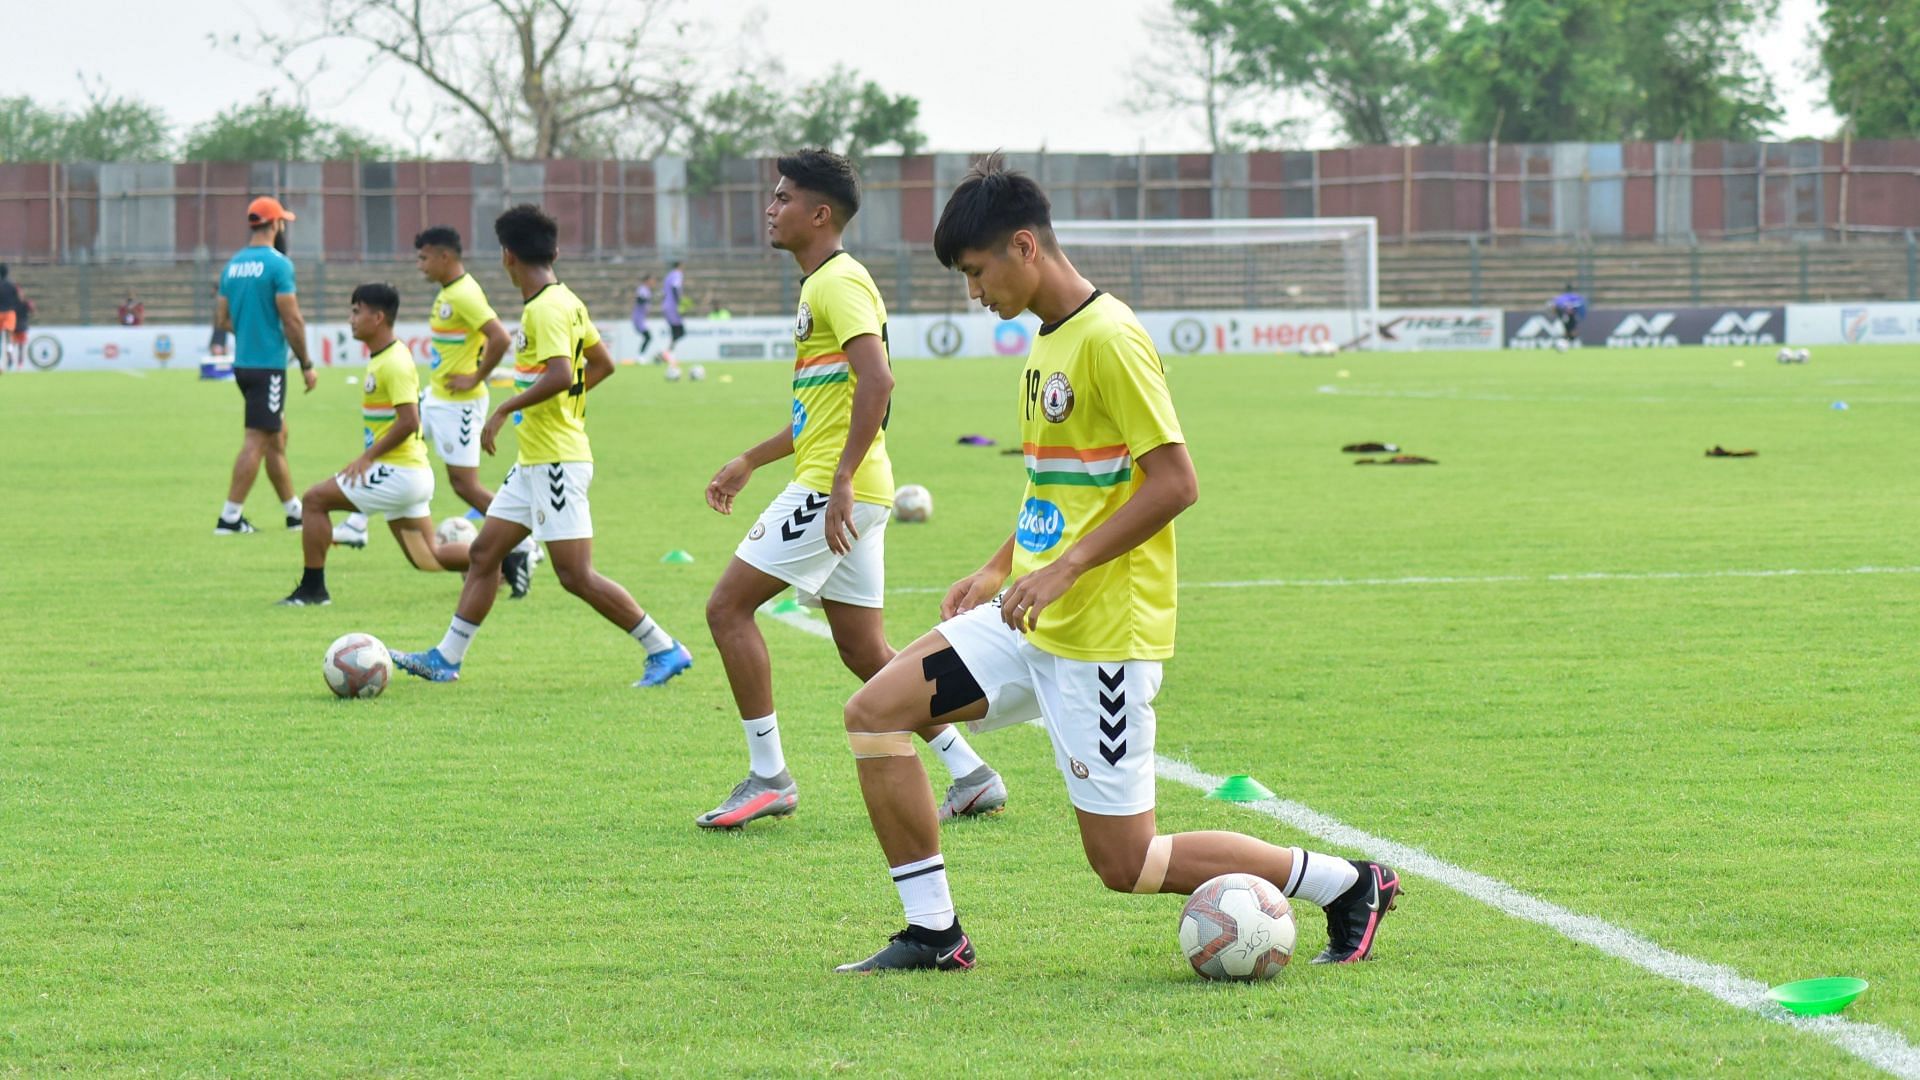 Sudeva Delhi FC players train ahead of their upcoming I-League encounter - Image Courtesy: I-League Twitter